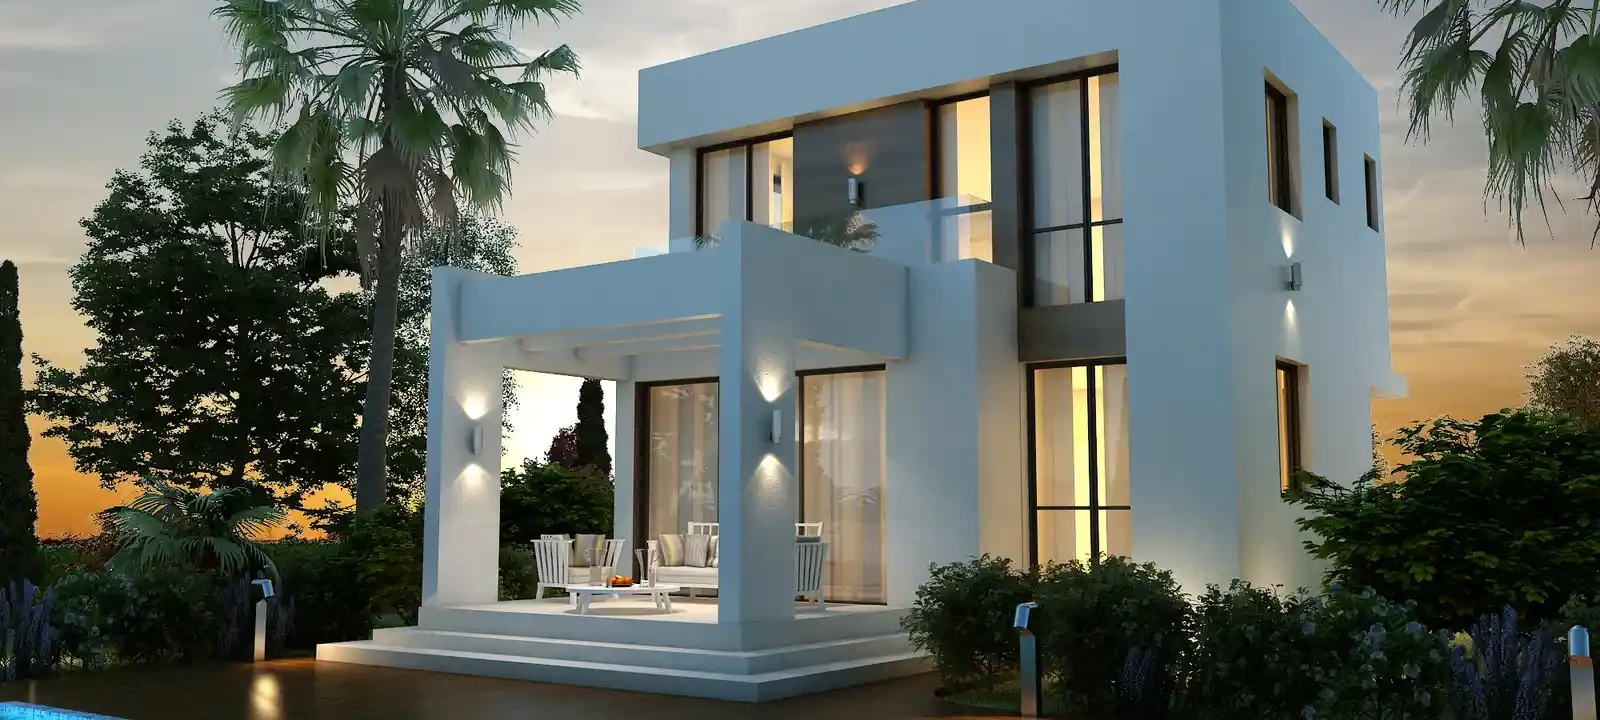 3-bedroom villa fоr sаle €440.000, image 1